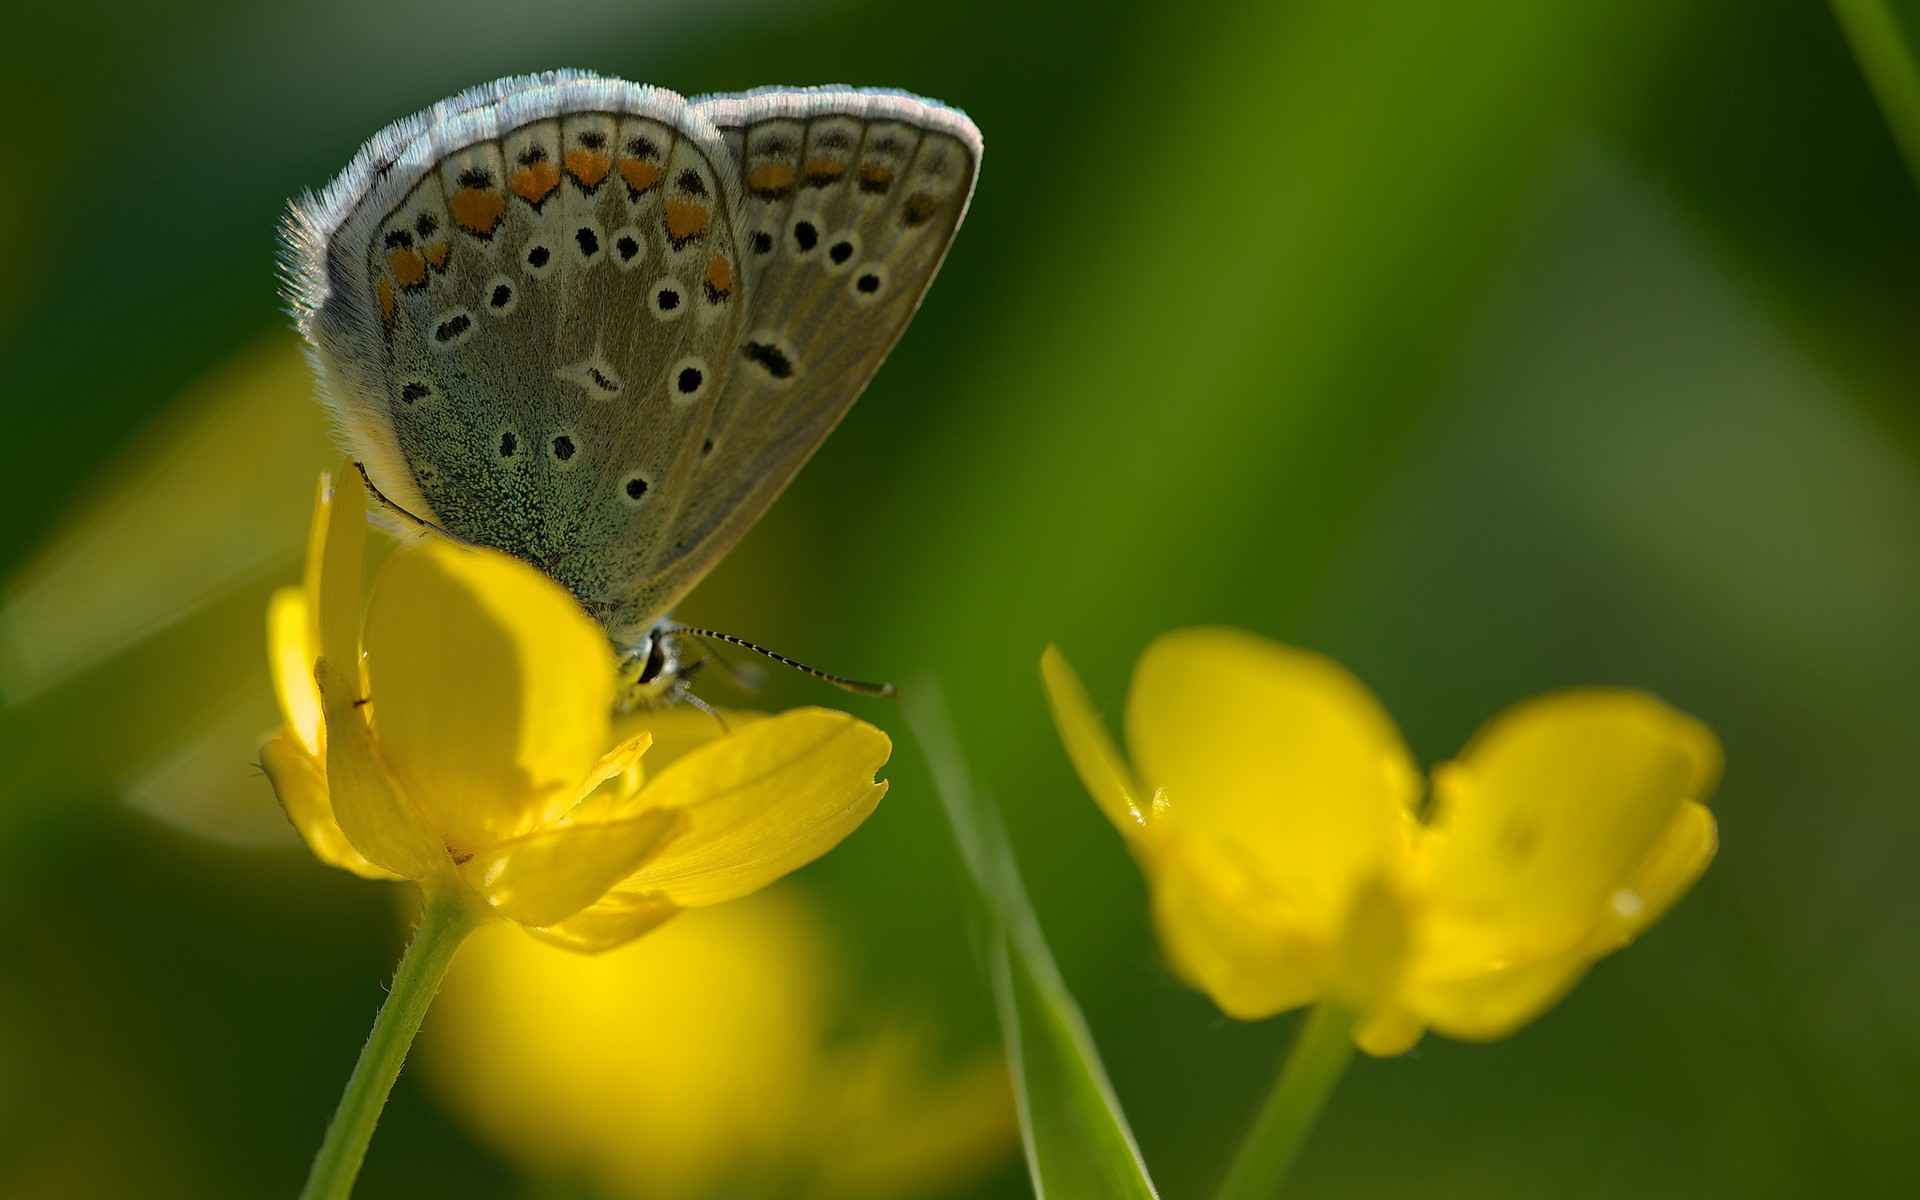 Пыльца крылья. Пыльца бабочки. Бабочка собирает пыльцу. Бабочка питается нектаром. Пыльца на крыльях бабочек.